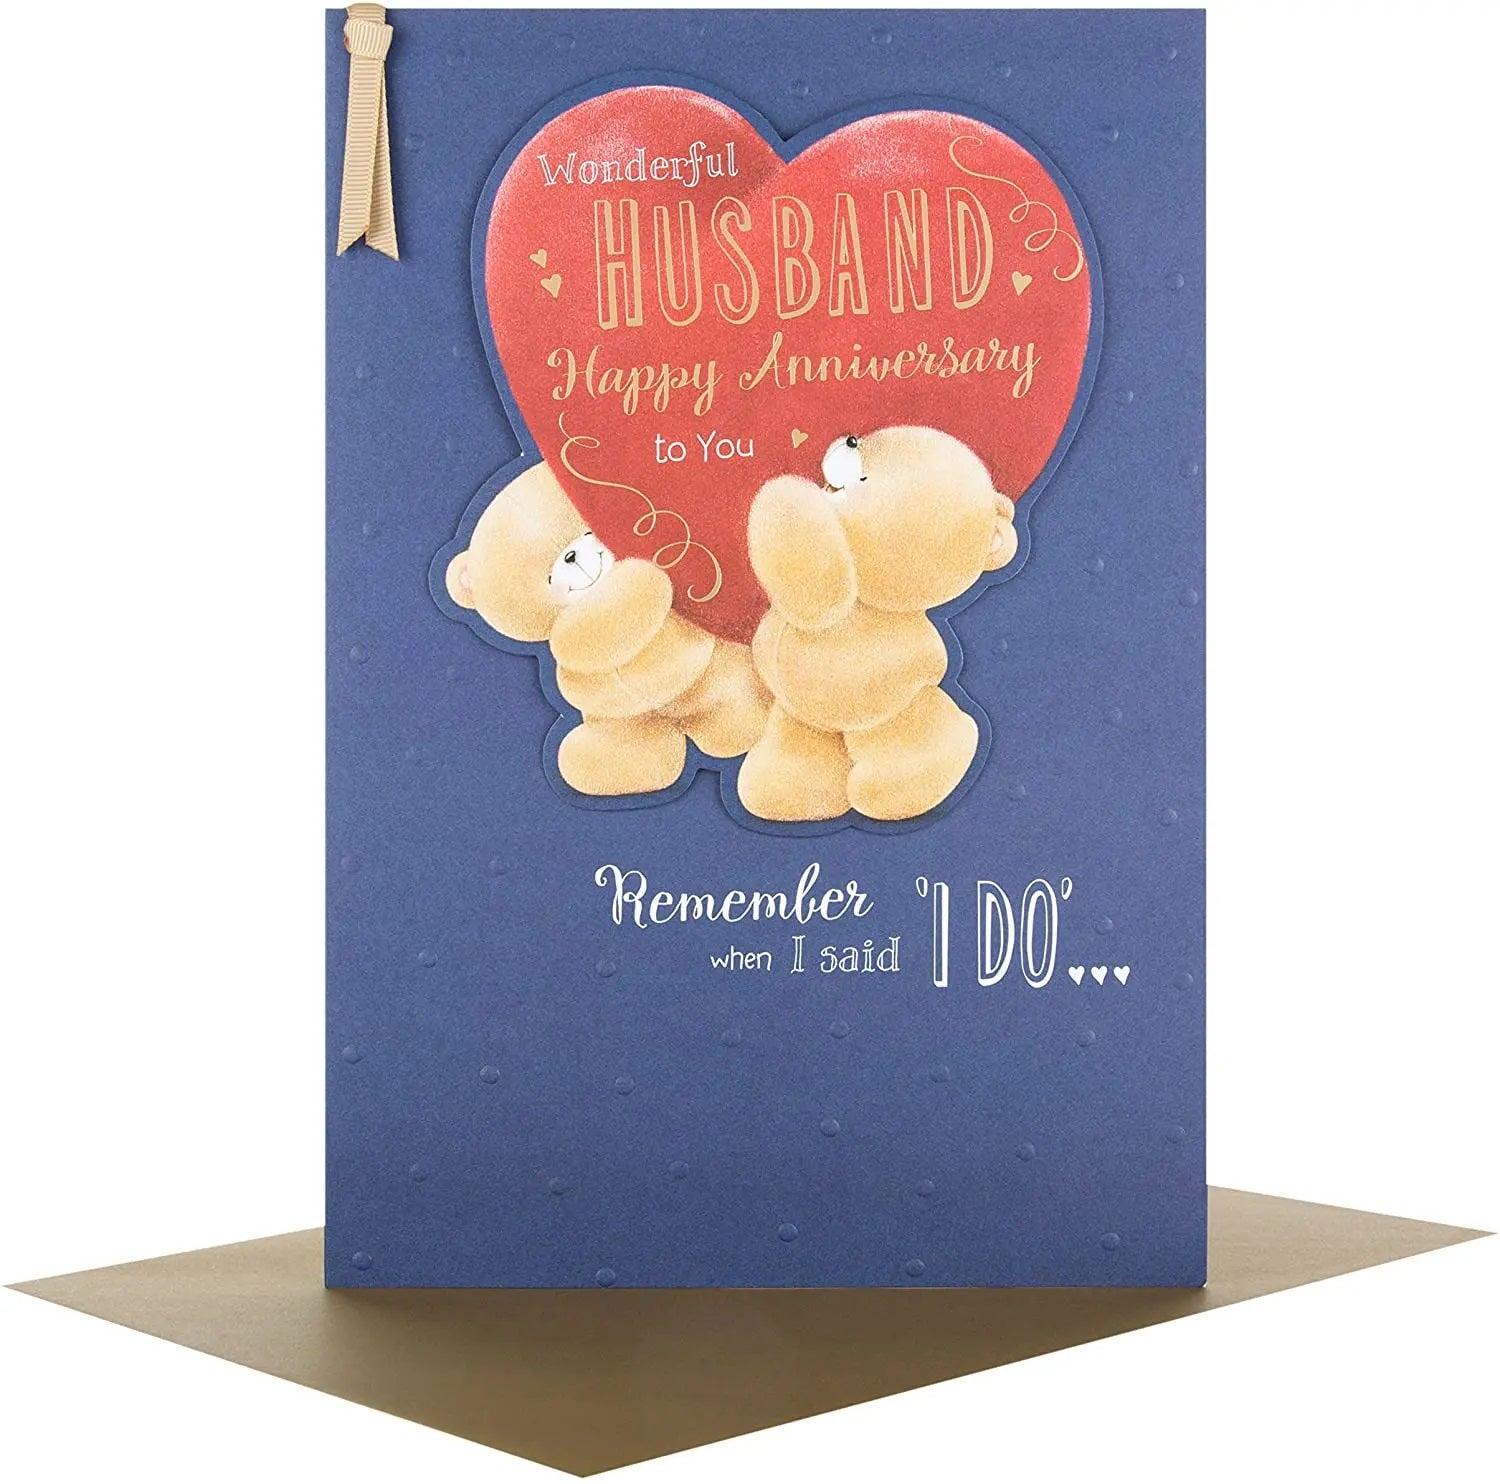 Husband Anniversary Card - Forever Friends - When I Said "I DO"